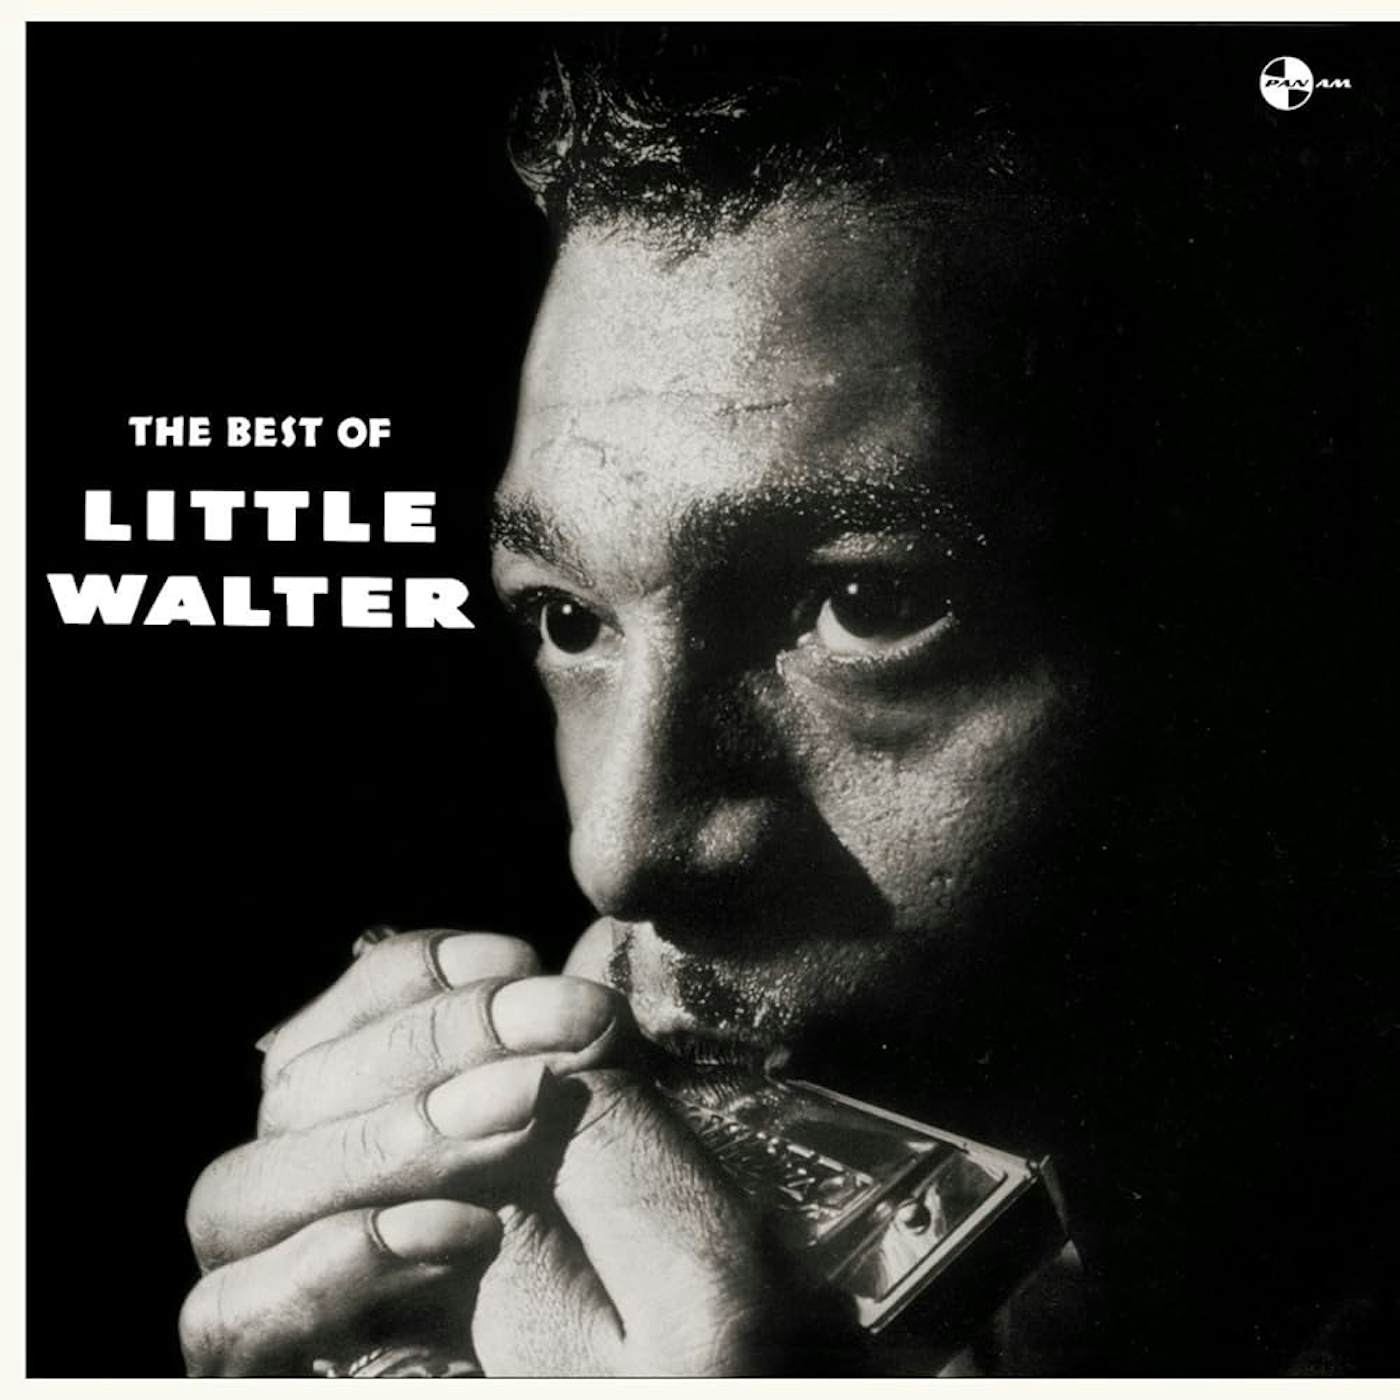 BEST OF LITTLE WALTER (BONUS TRACKS) Vinyl Record - Limited Edition, 180 Gram Pressing